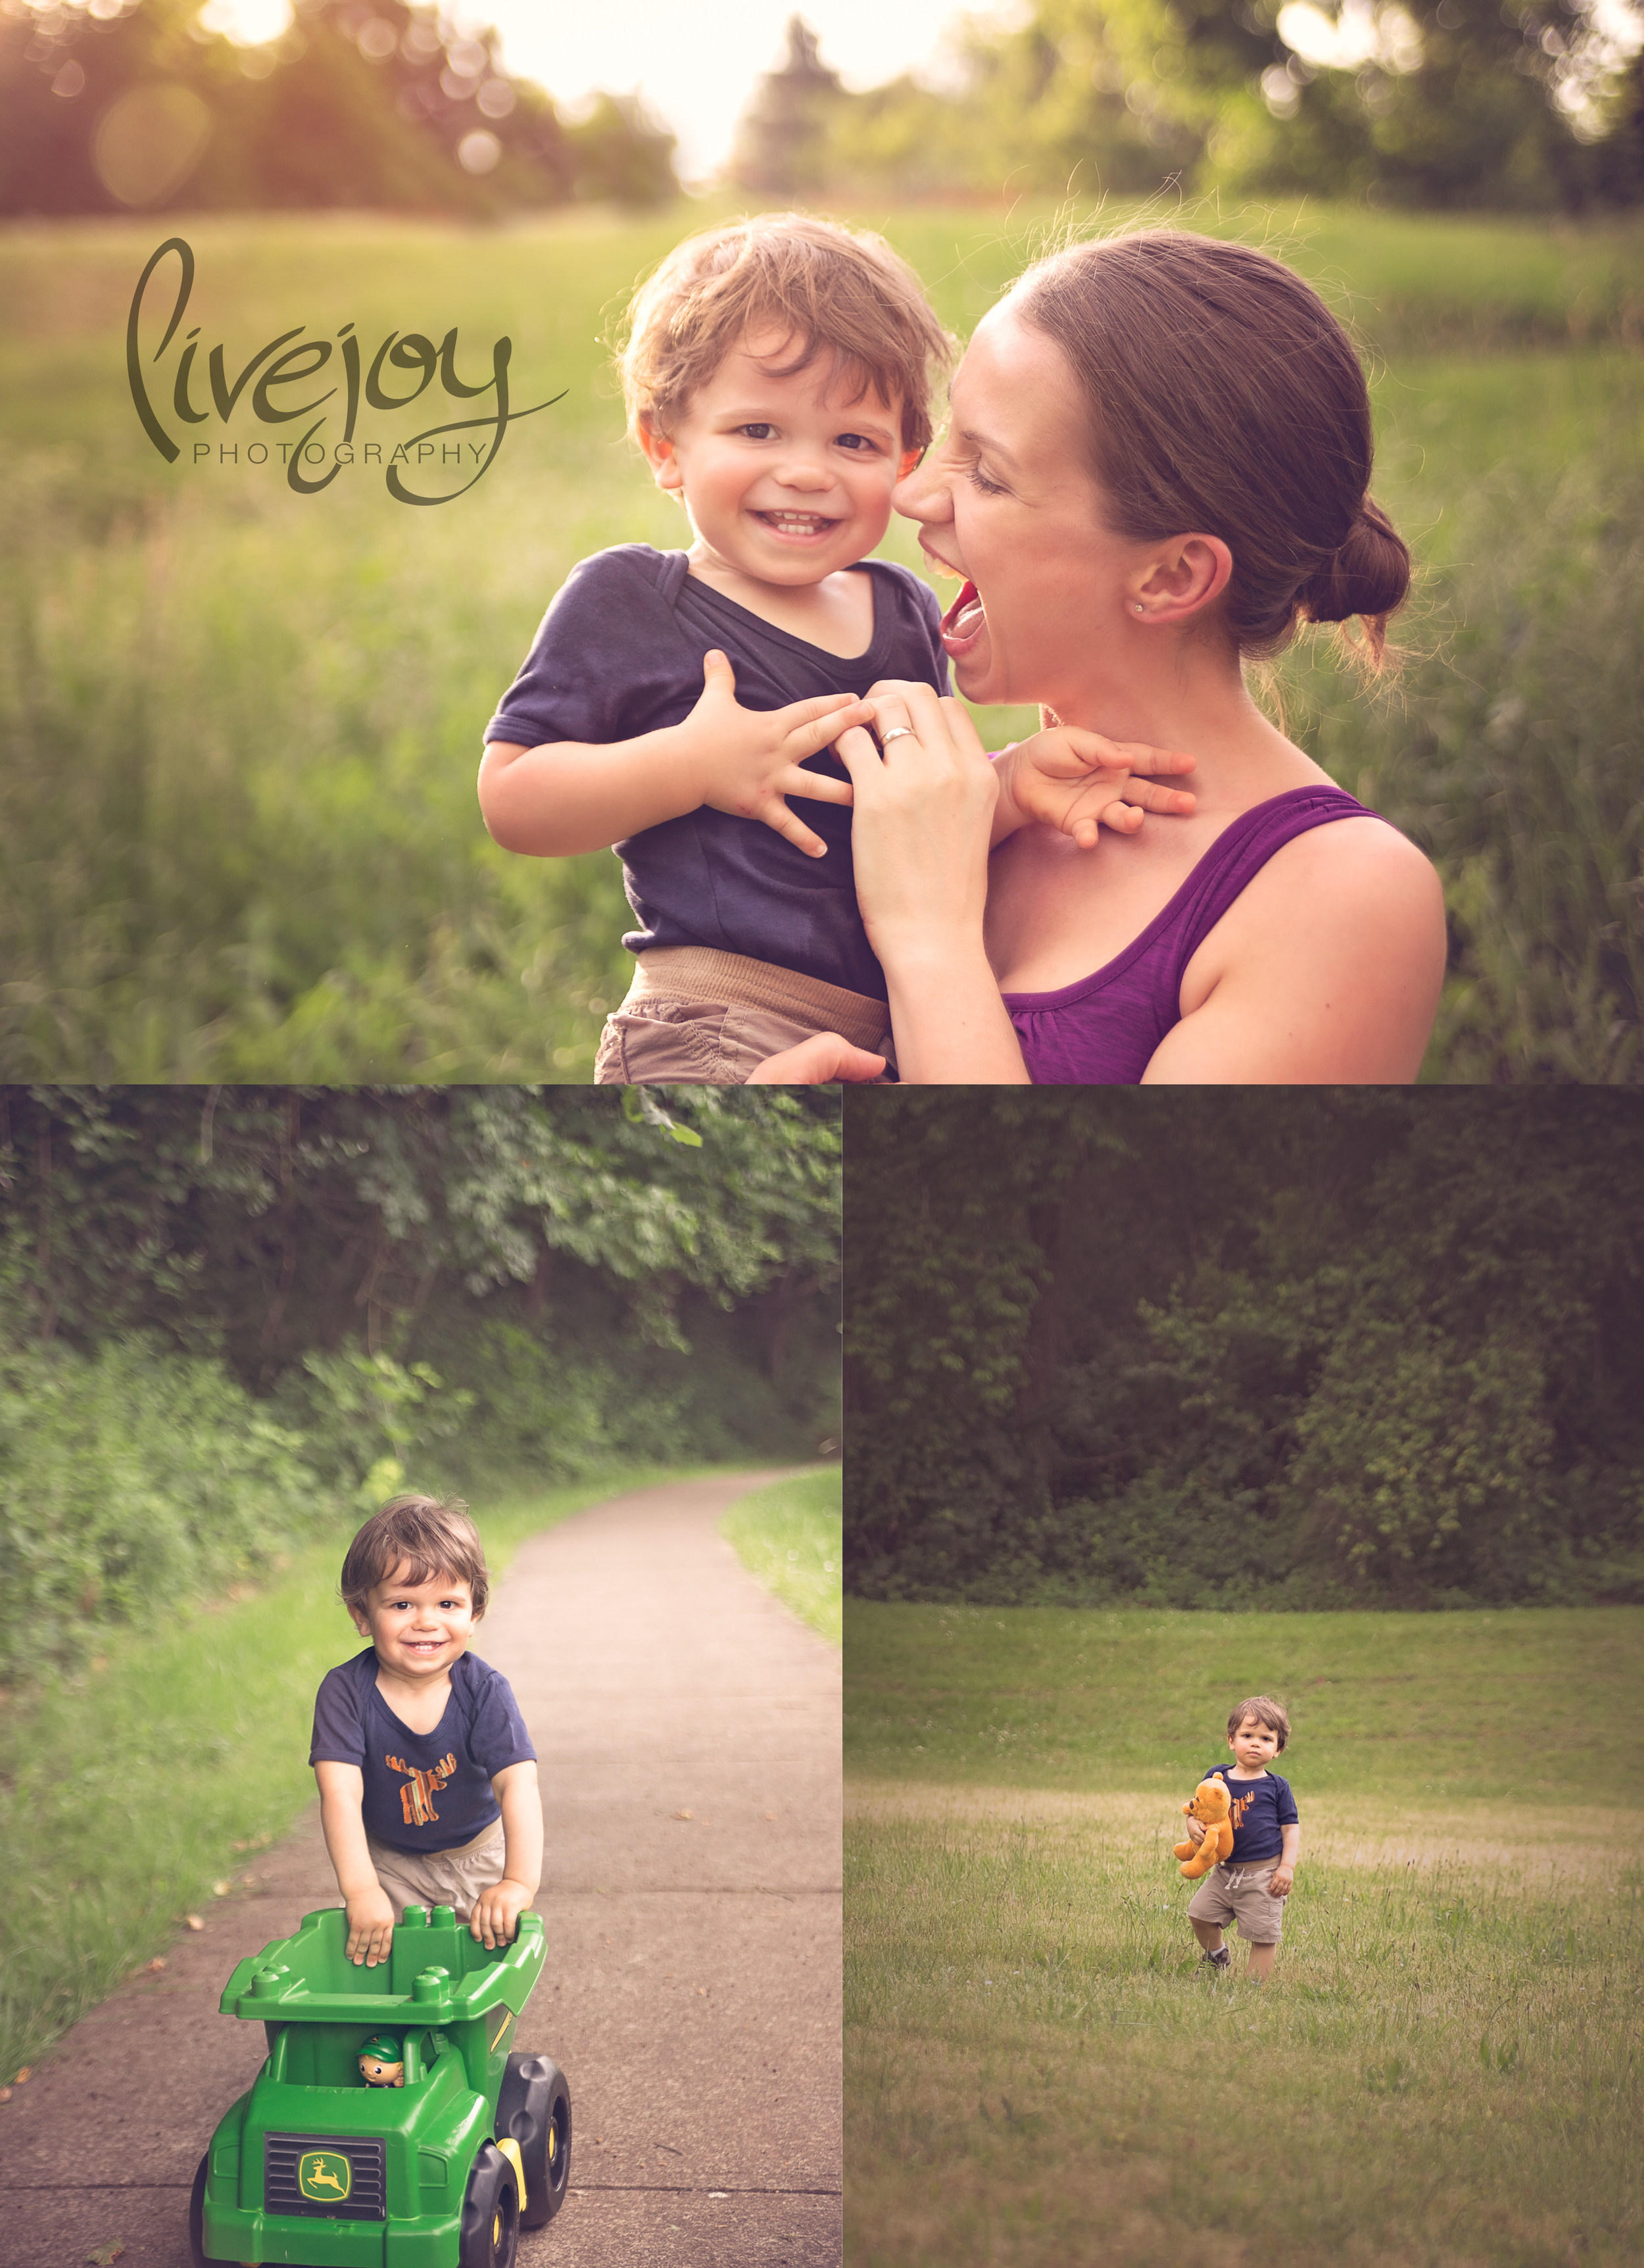 Baby Photography | Oregon | LiveJoy Photography 